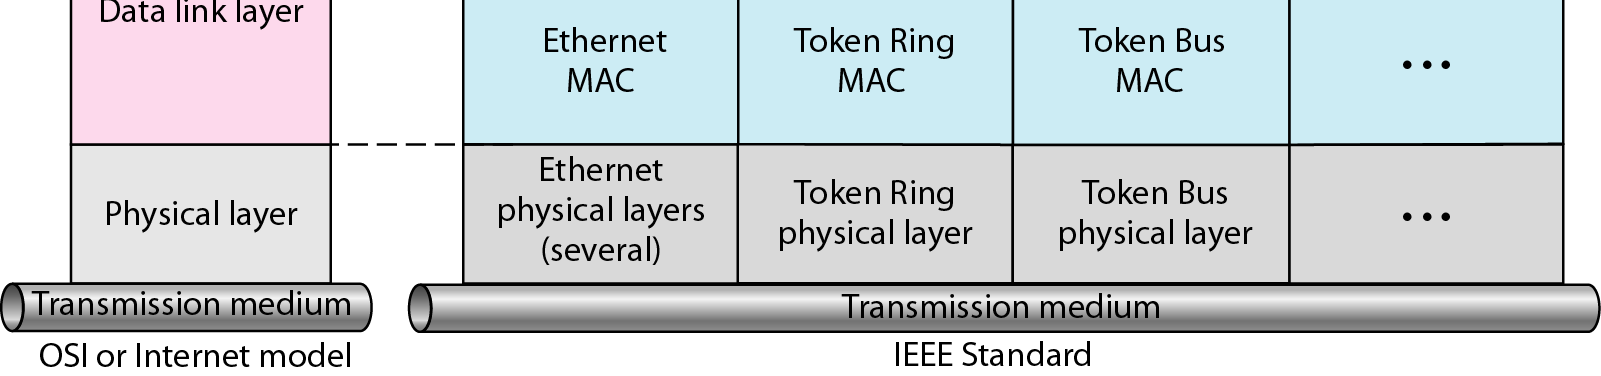 IEEE 802 project Το 1985, η IEEE ξεκίνησε ένα νέο project, το 802, γιαναθέσει τα standards που θα προδιαγράψουν την επικοινωνία μεταξύ εξοπλισμού LANs από